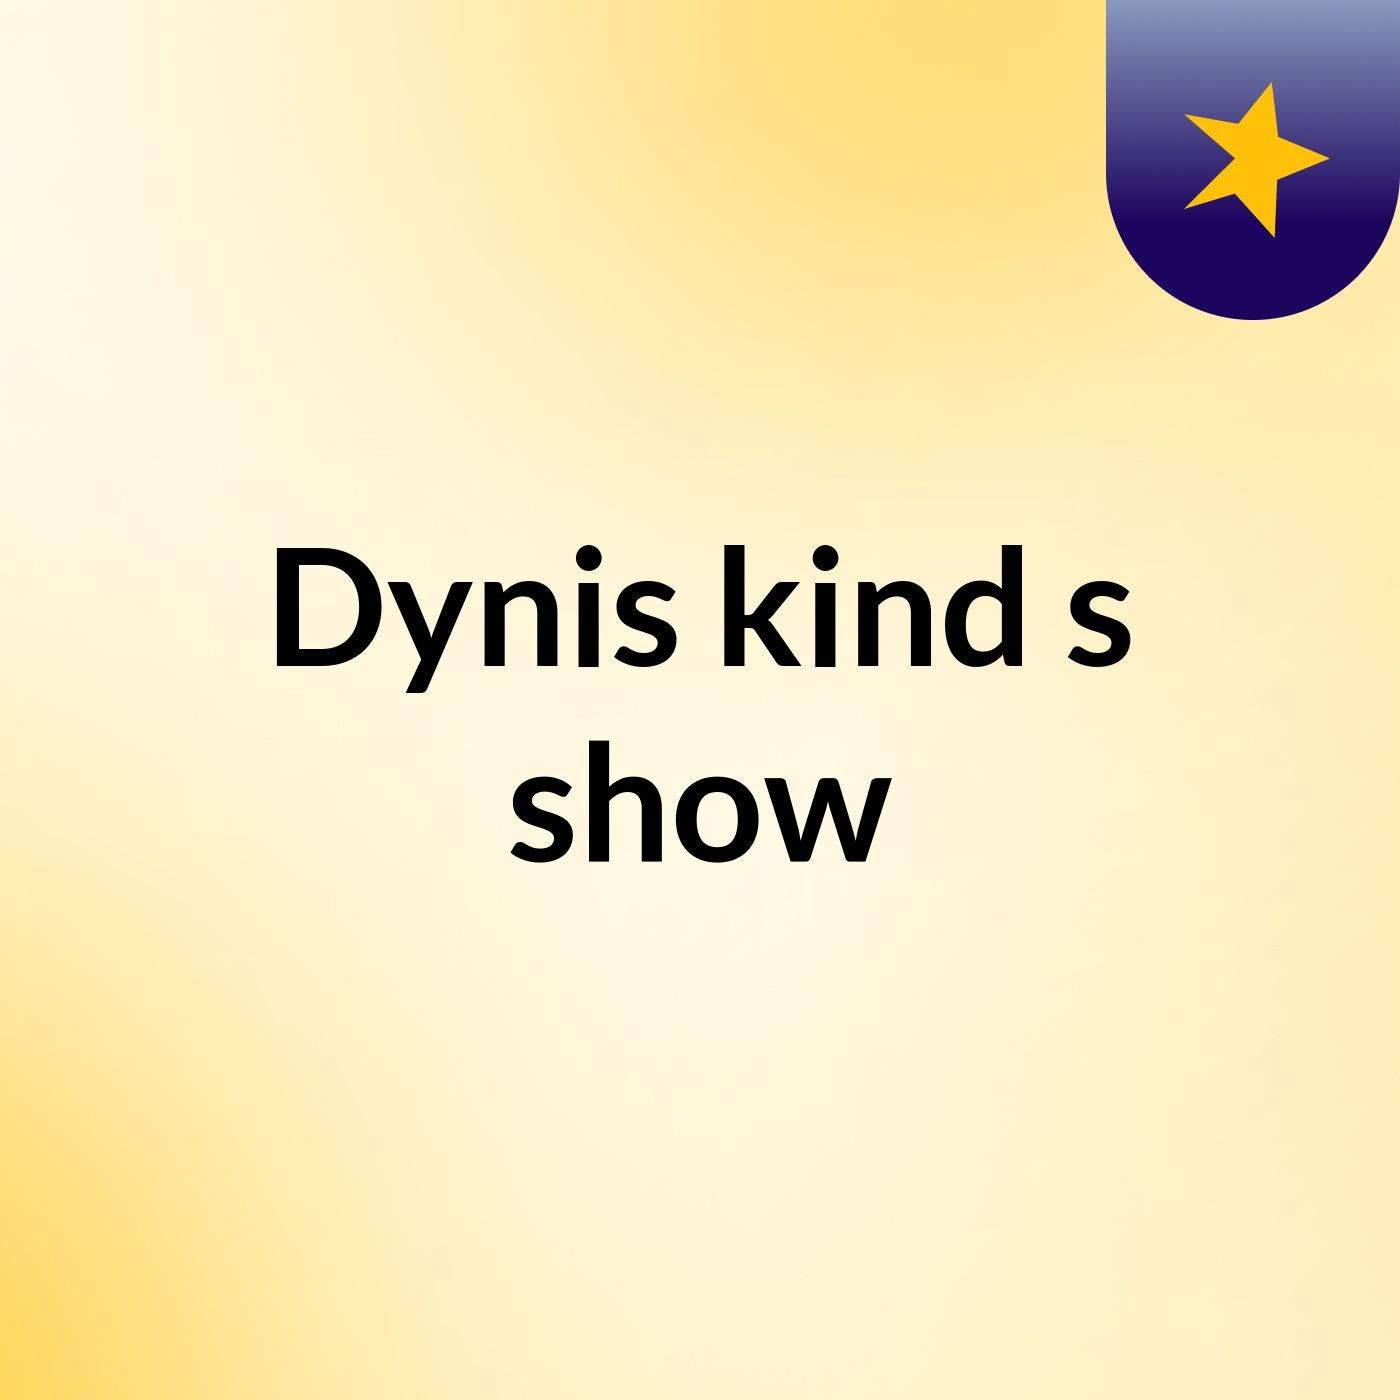 Episode 3 - Dynis kind's show